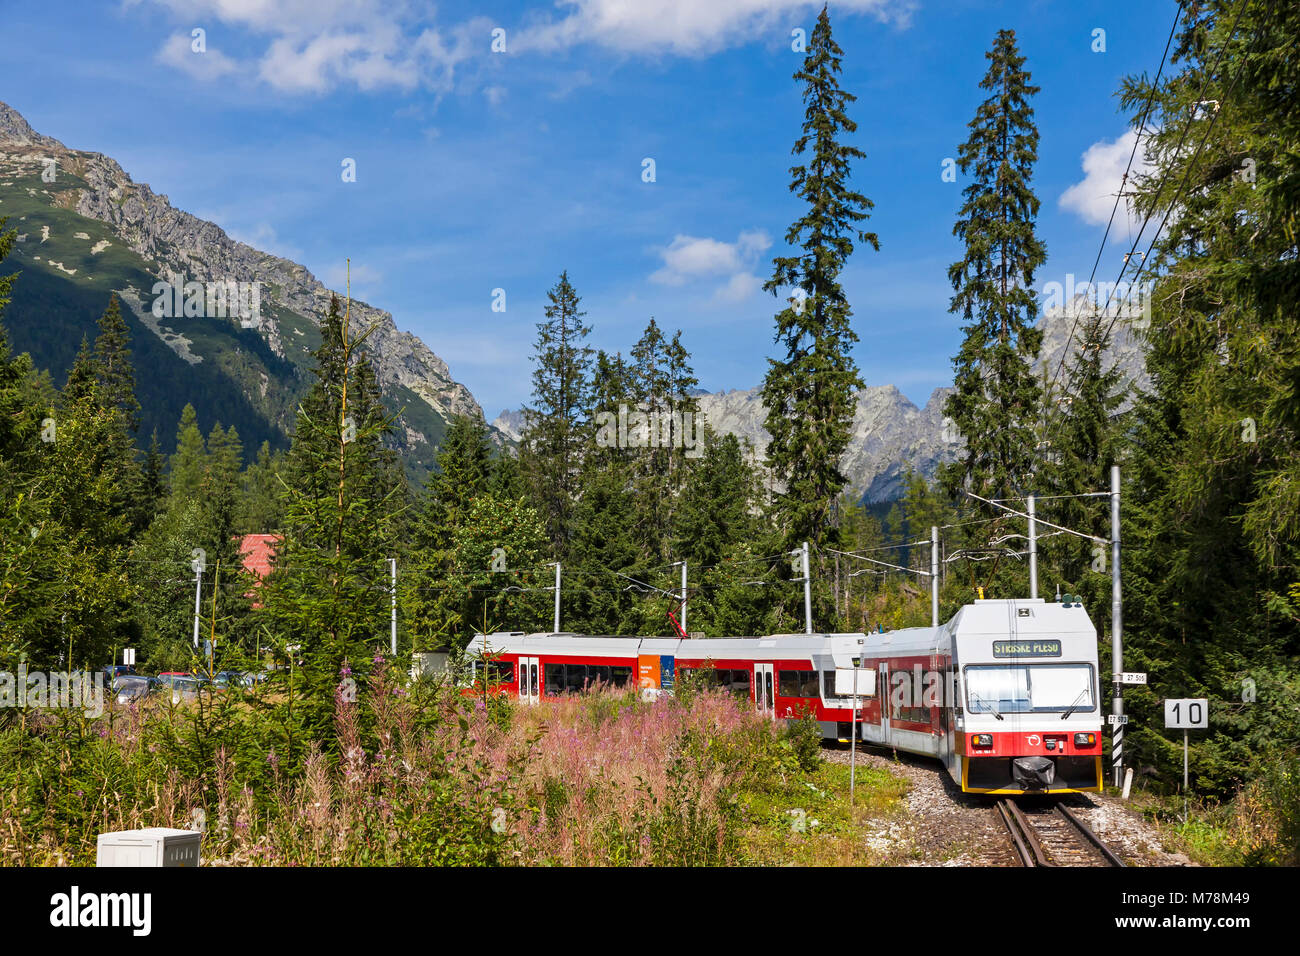 High Tatras, Slovakia - August 27, 2015: Tatra Electric Railways (TEZ-TER) train (also known as 'Tatra tram') arrives to Popradske Pleso stop in High  Stock Photo